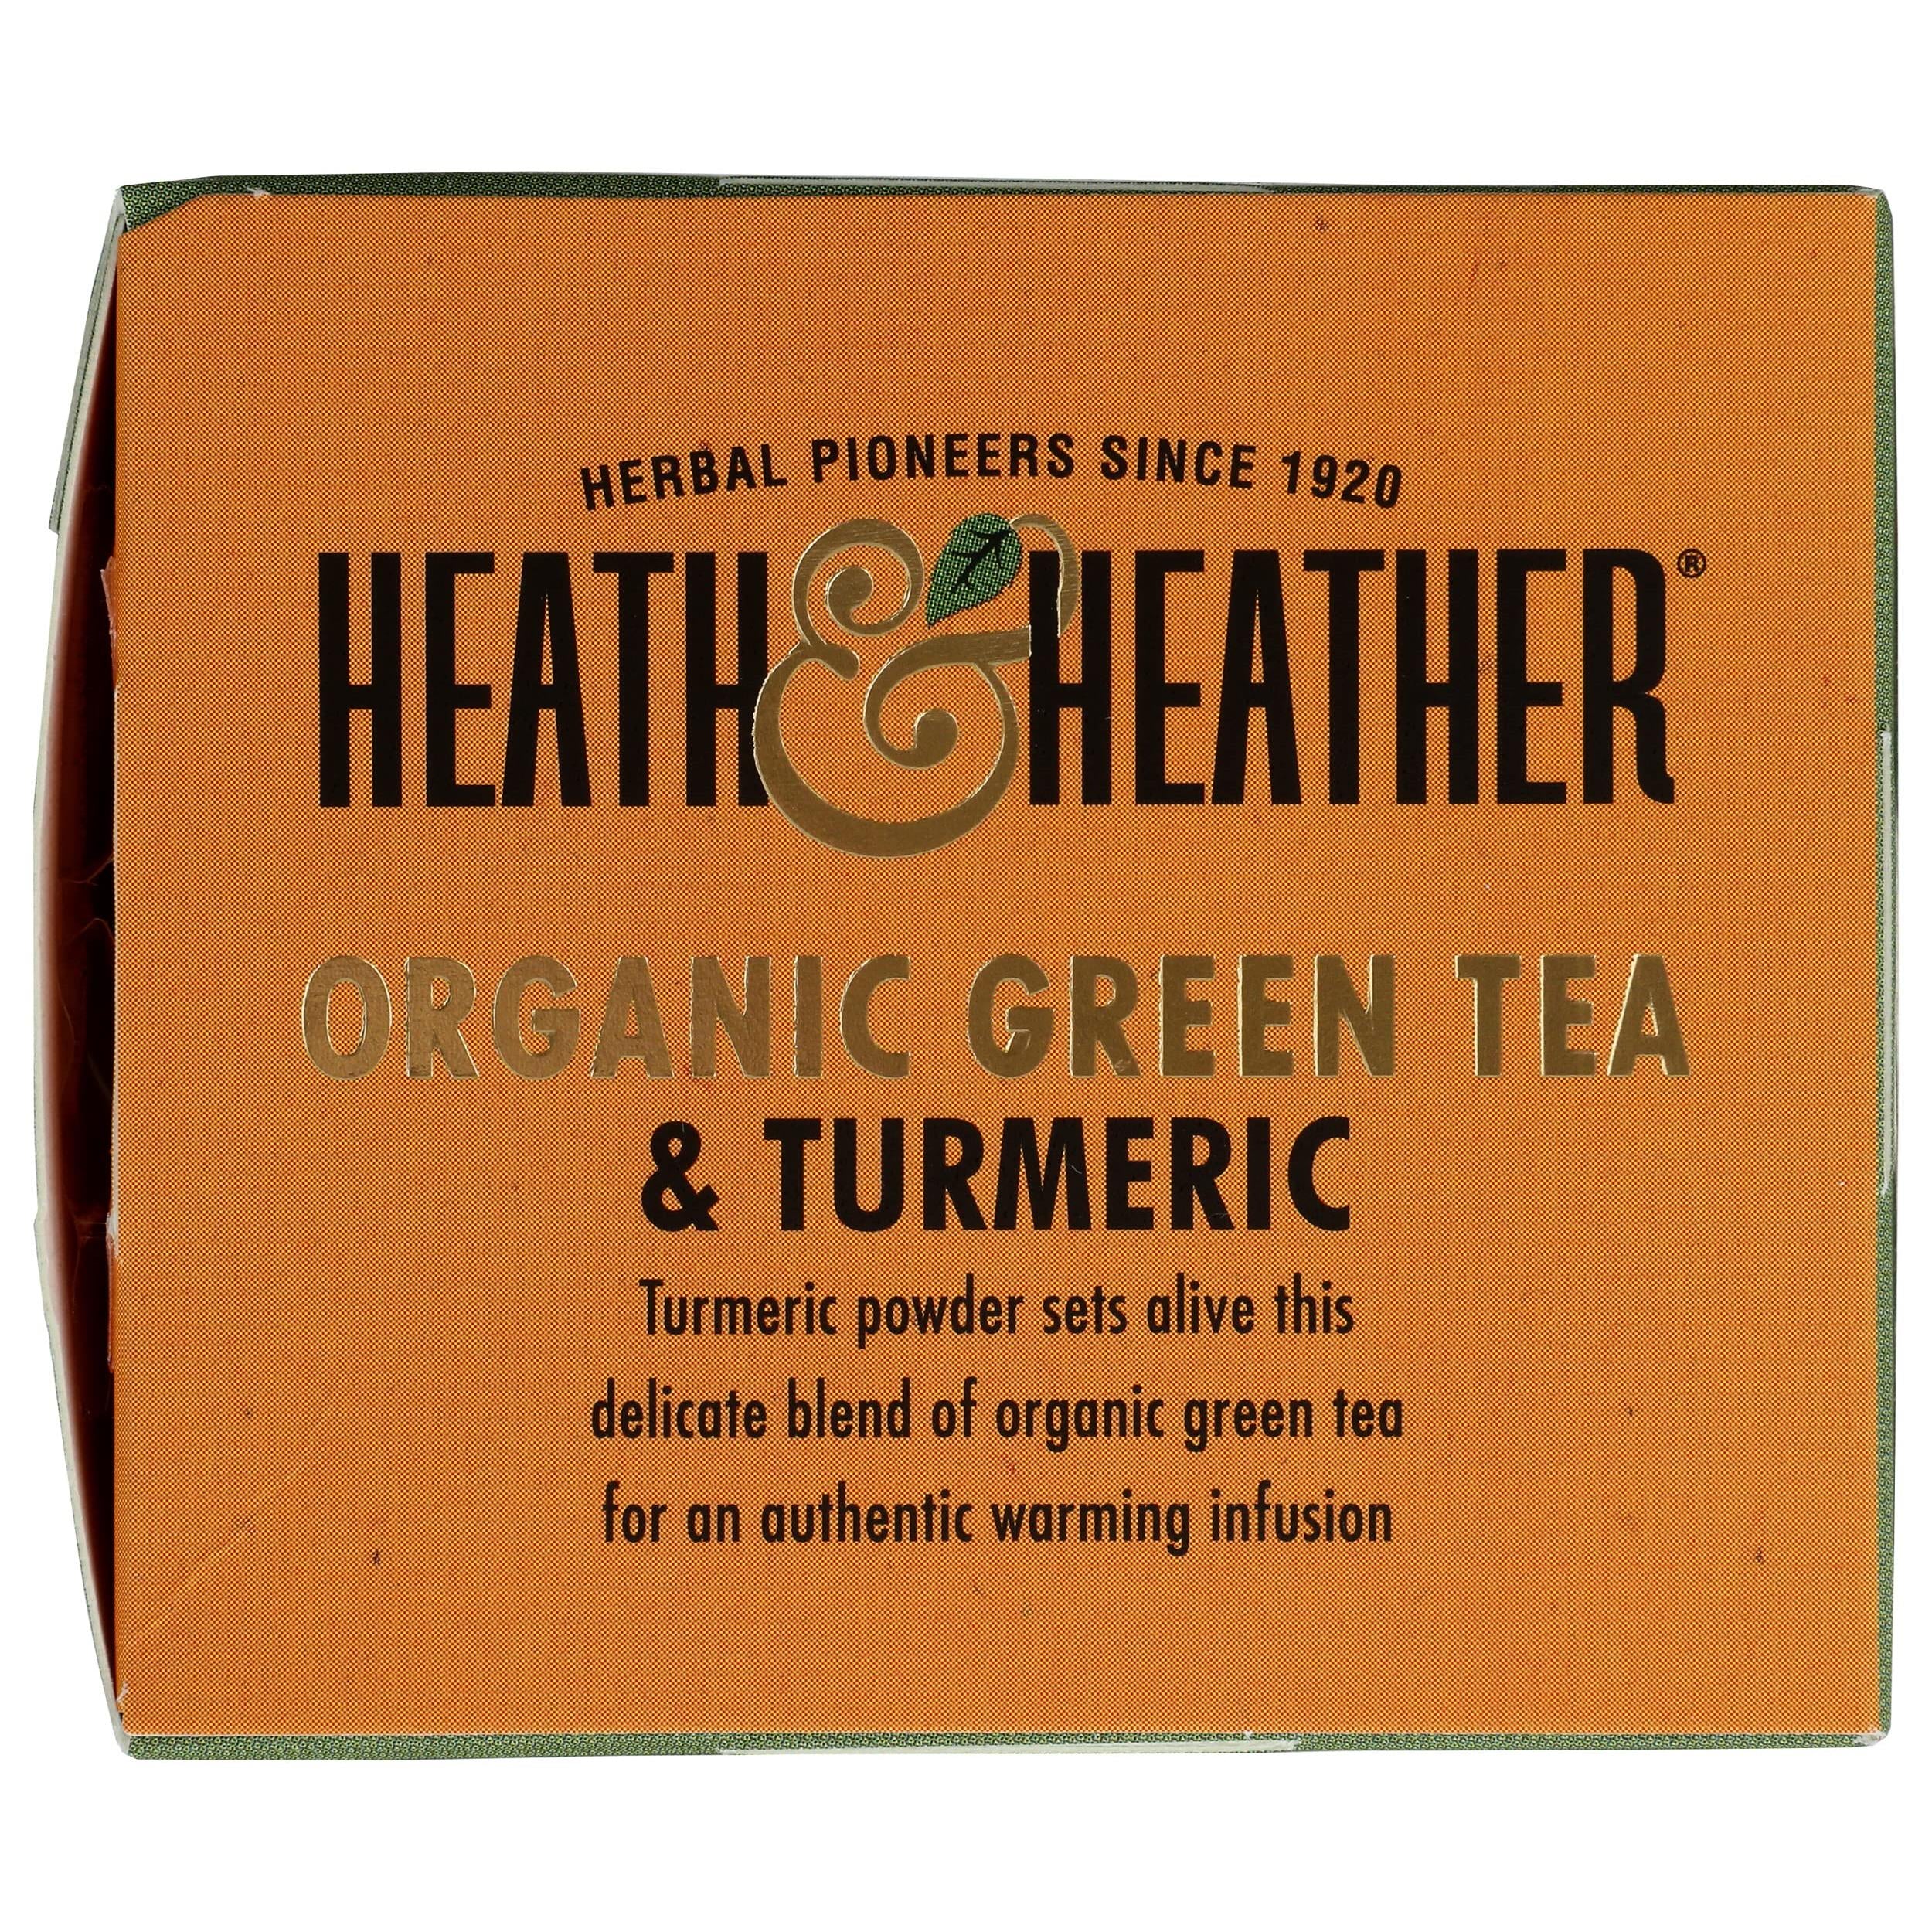 HEATH & HEATHER Organic Green Tea & Turmeric, 1.4 OZ